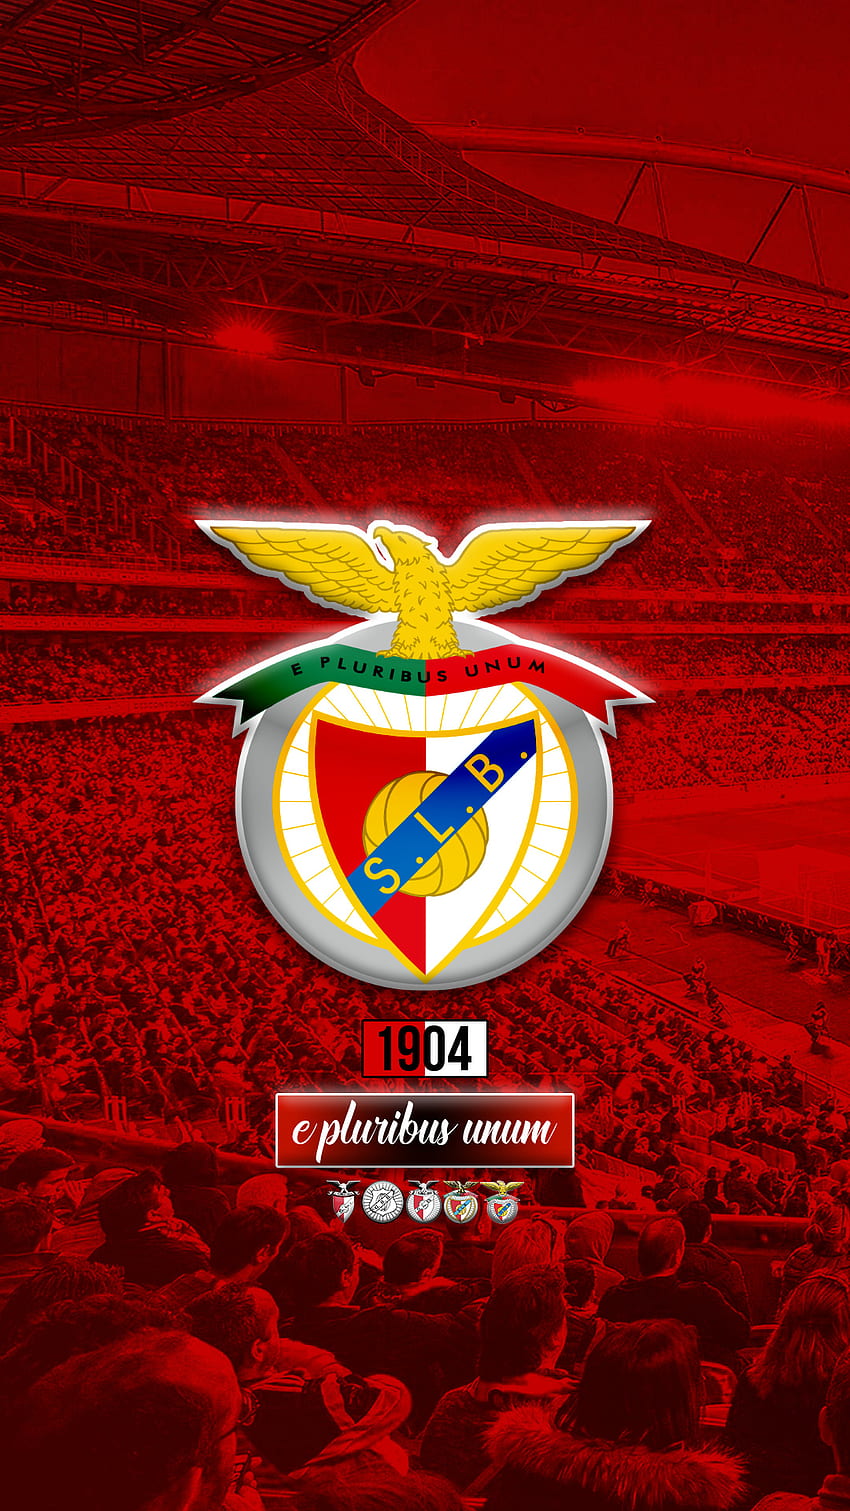 Olahraga Lisboa e Benfica, merah, simbolo, glorioso, historia, konsep, slb, gloria, sportlisboaebenfica wallpaper ponsel HD